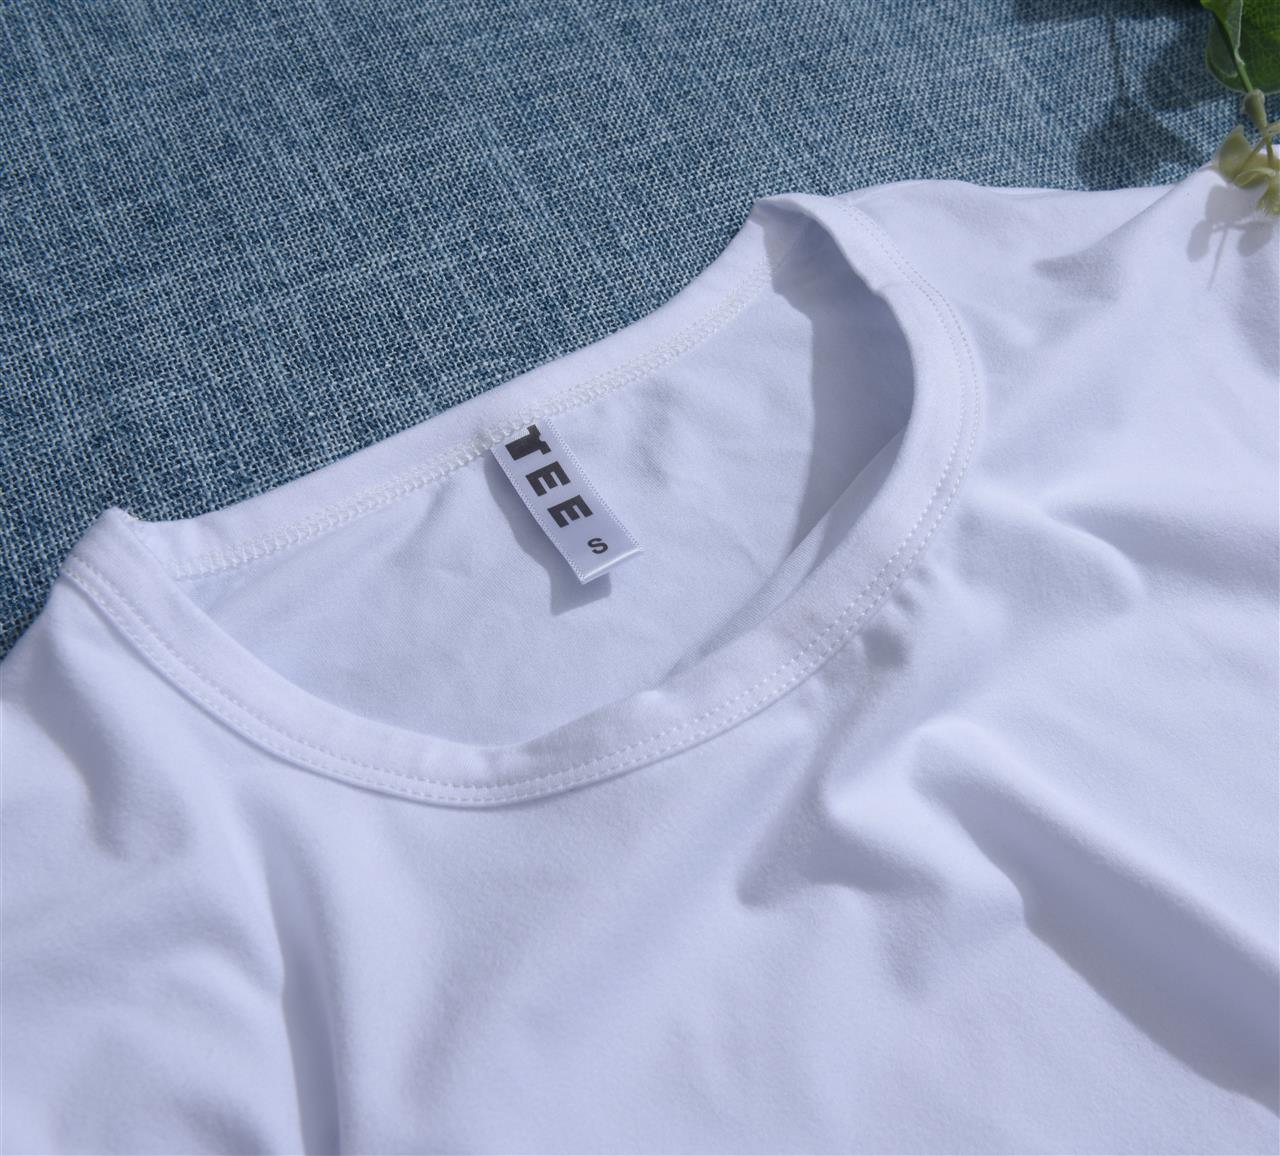 Style U :  Flower Fashion Femal White T-Shirt